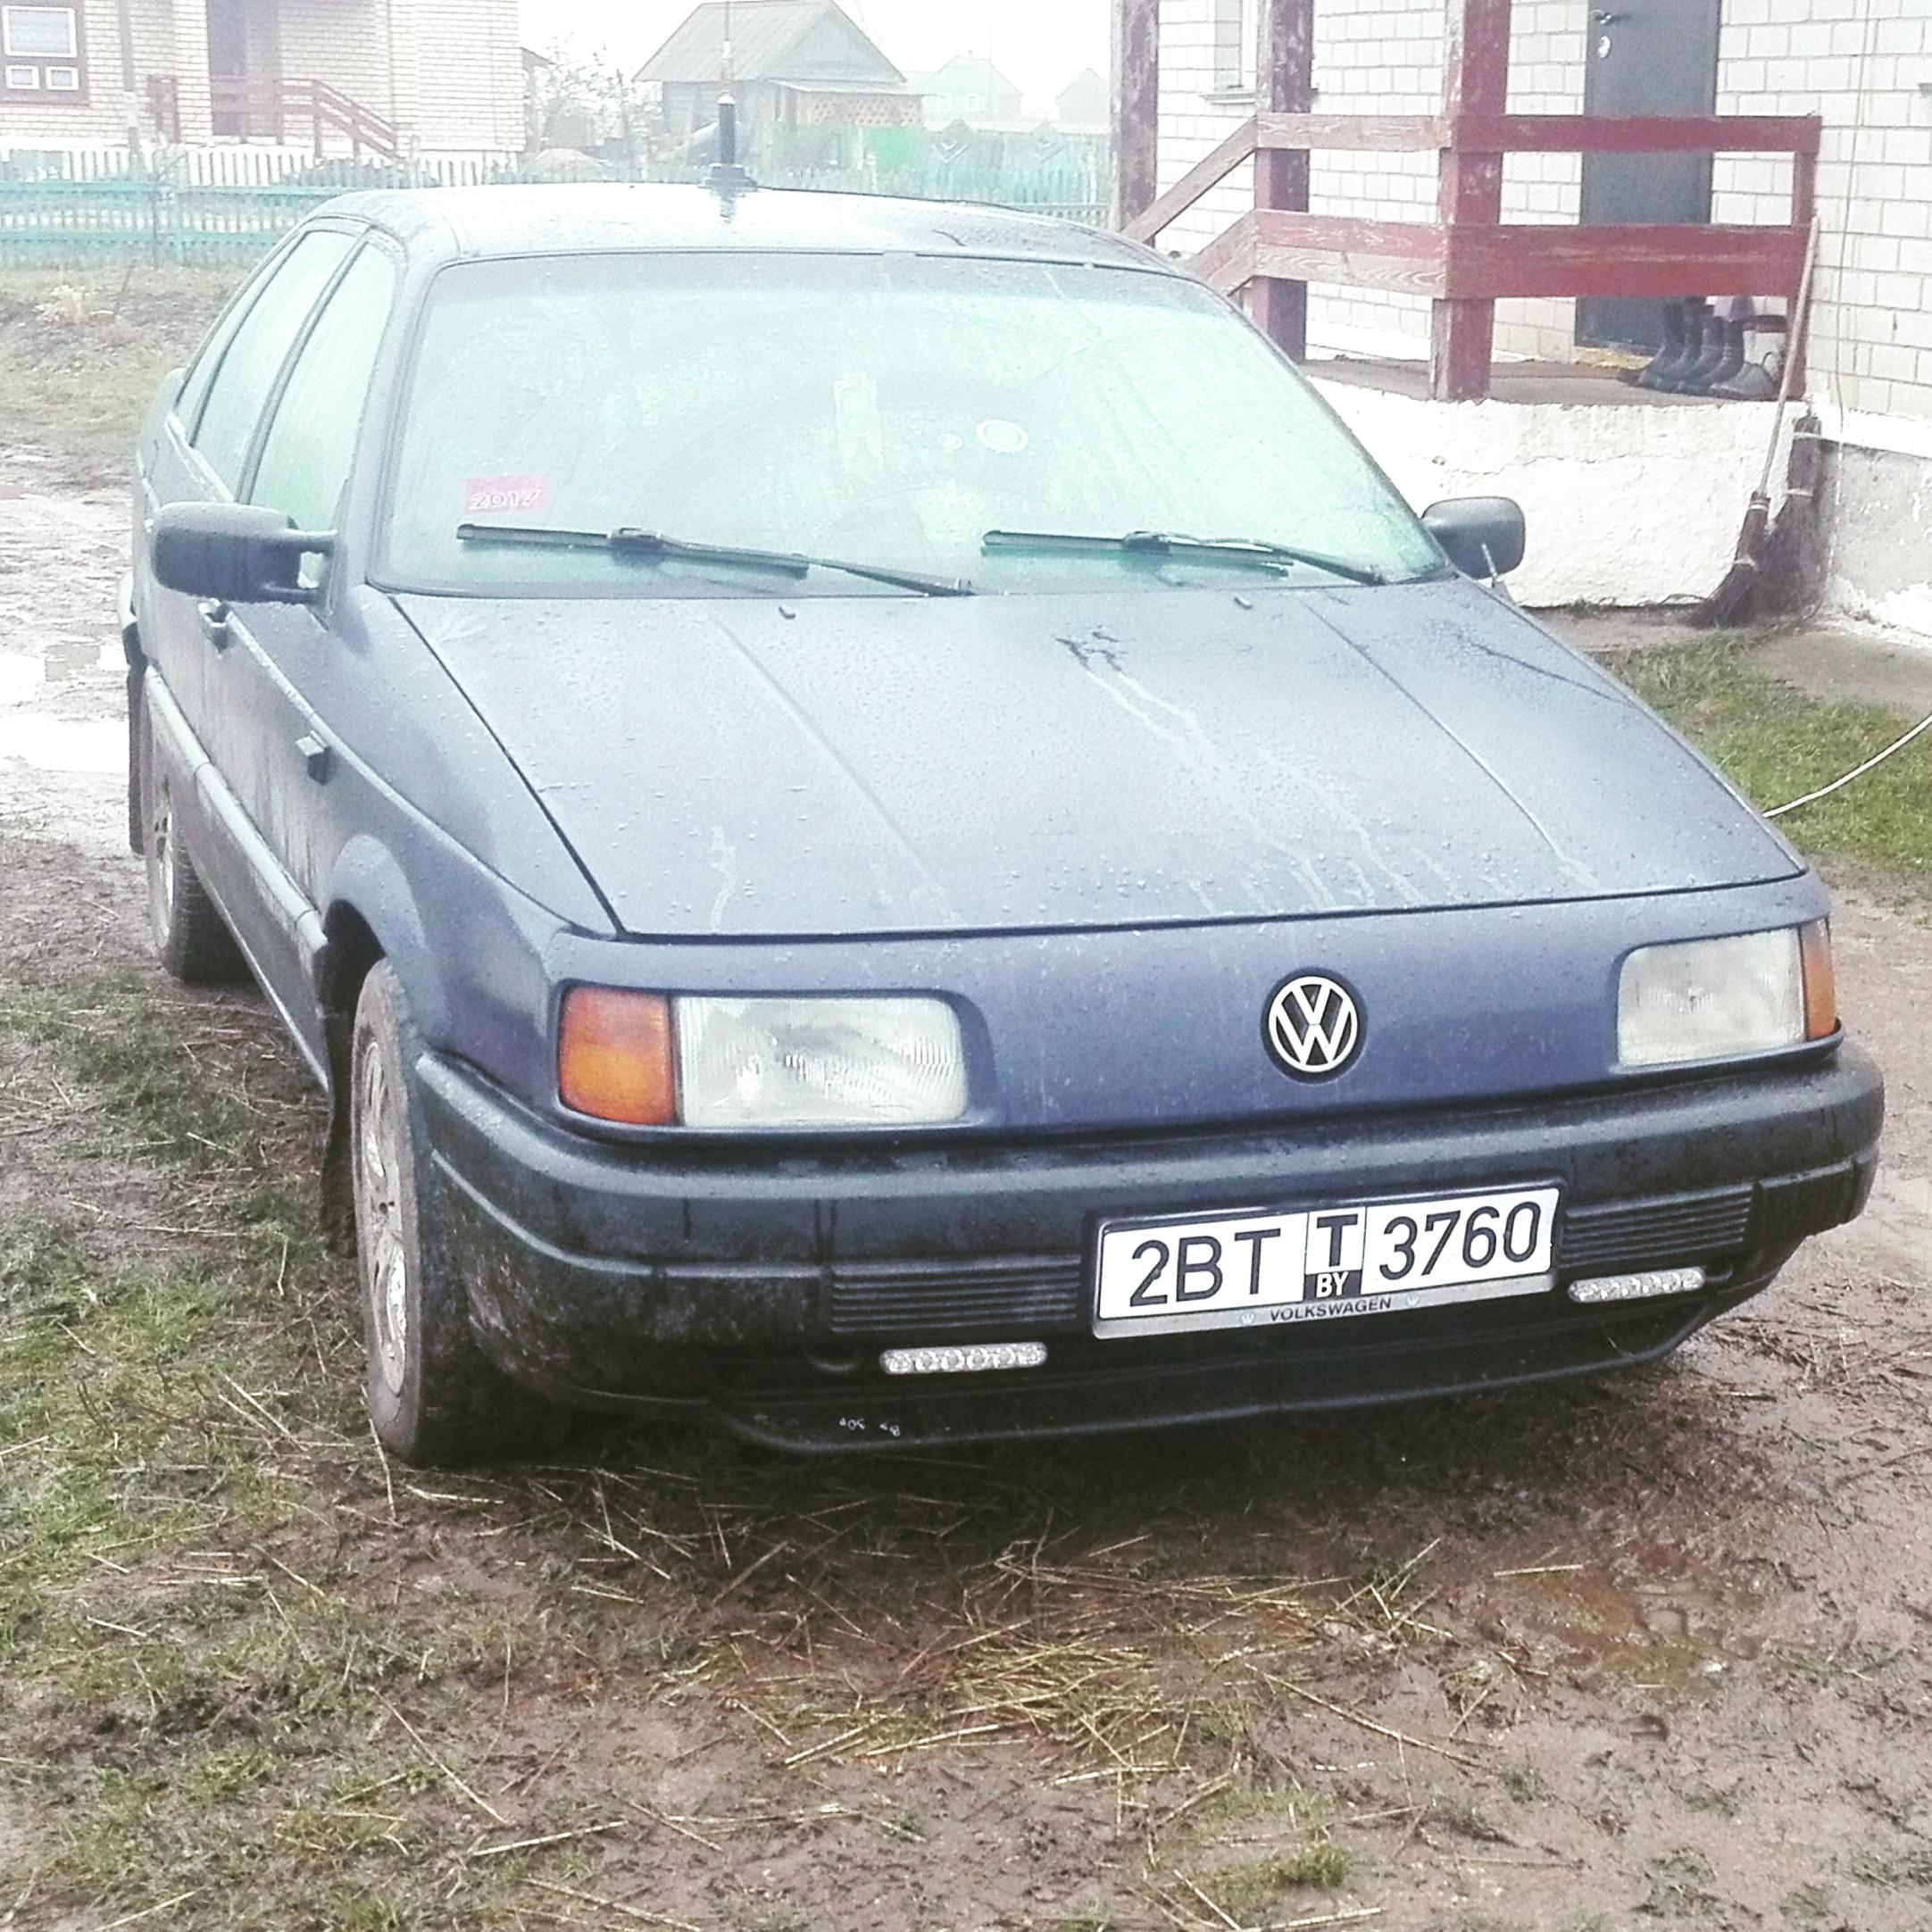 Продажа на куфаре в беларуси. Passat b3 с белорусскими номерами. Фольксваген машин до 1988. Kufar автомобили.